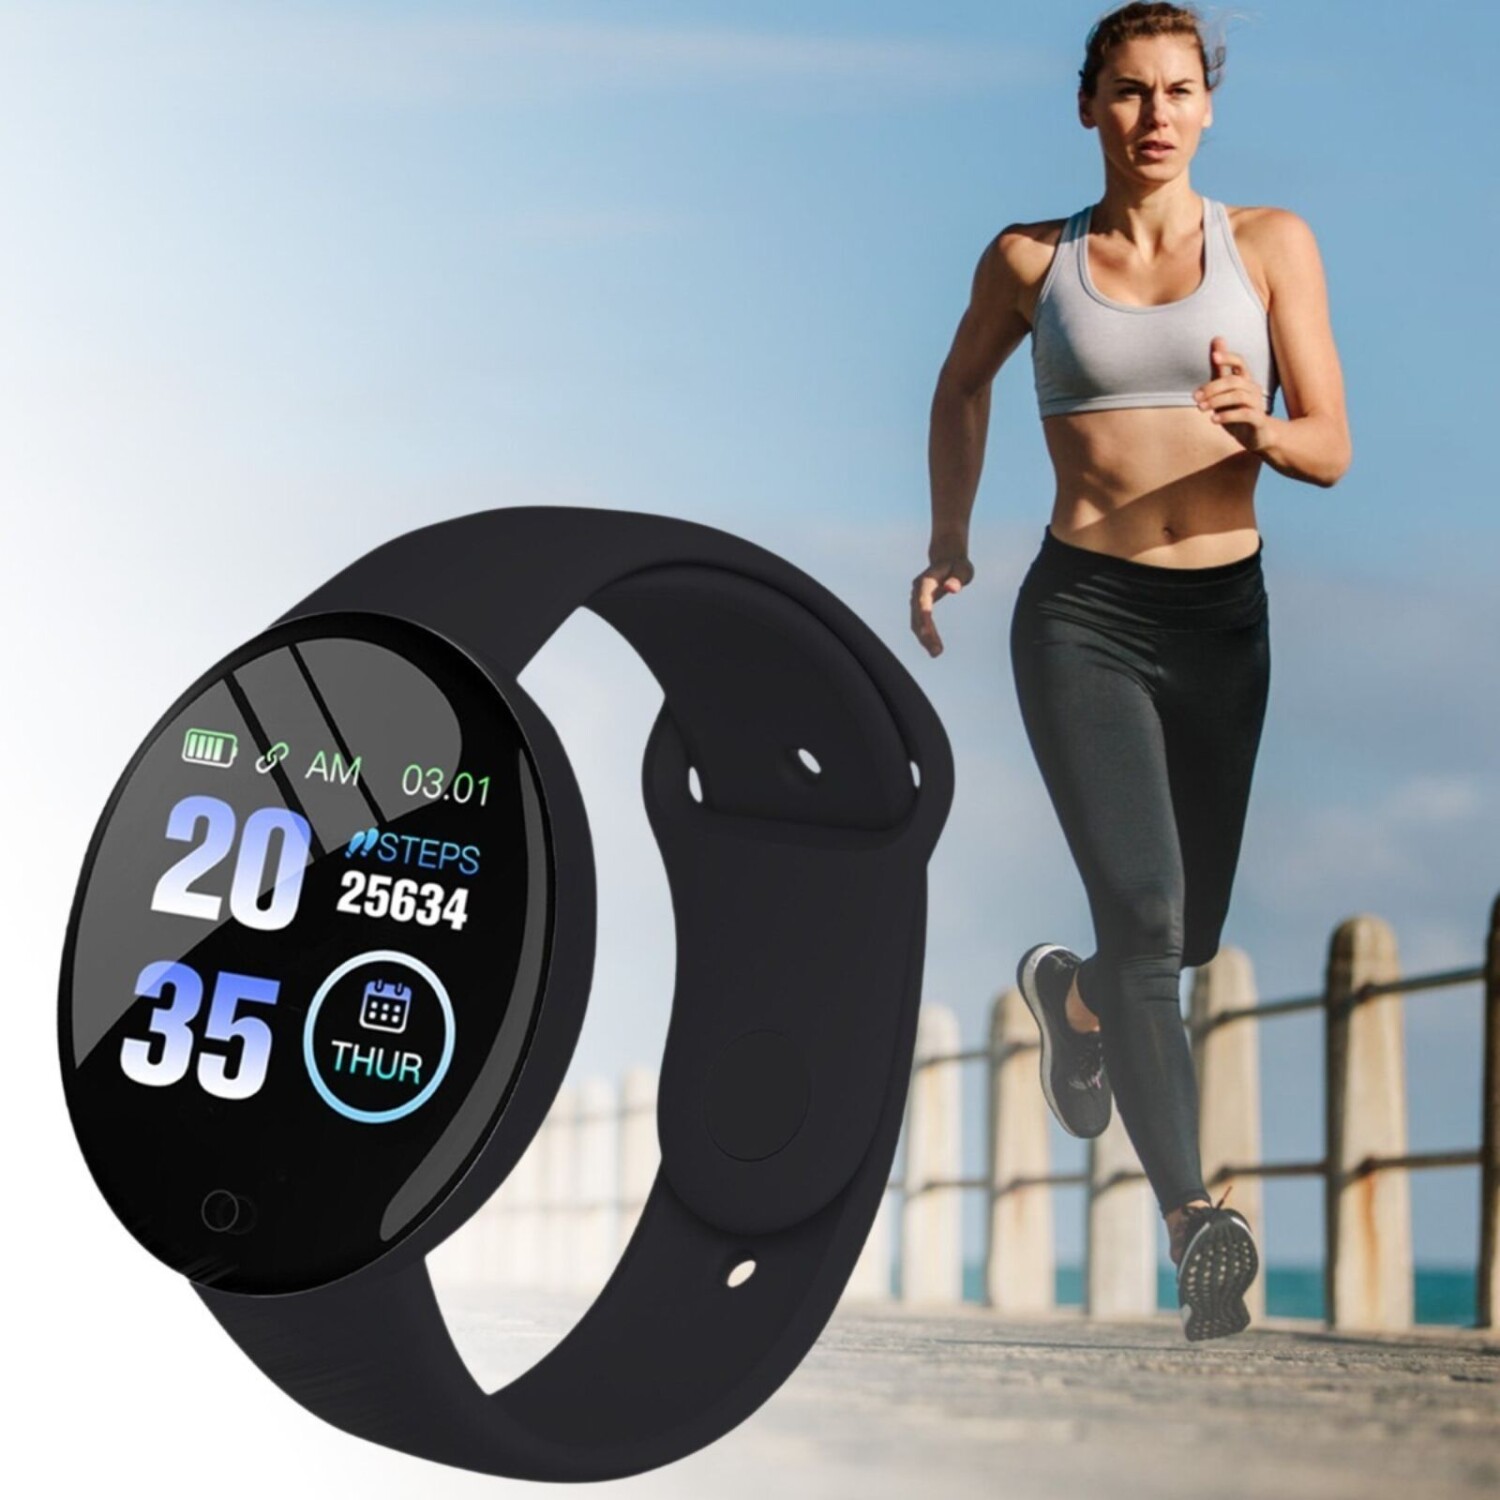 Atletis - Smartwatch Reloj Inteligente Redondo QS9 Negro